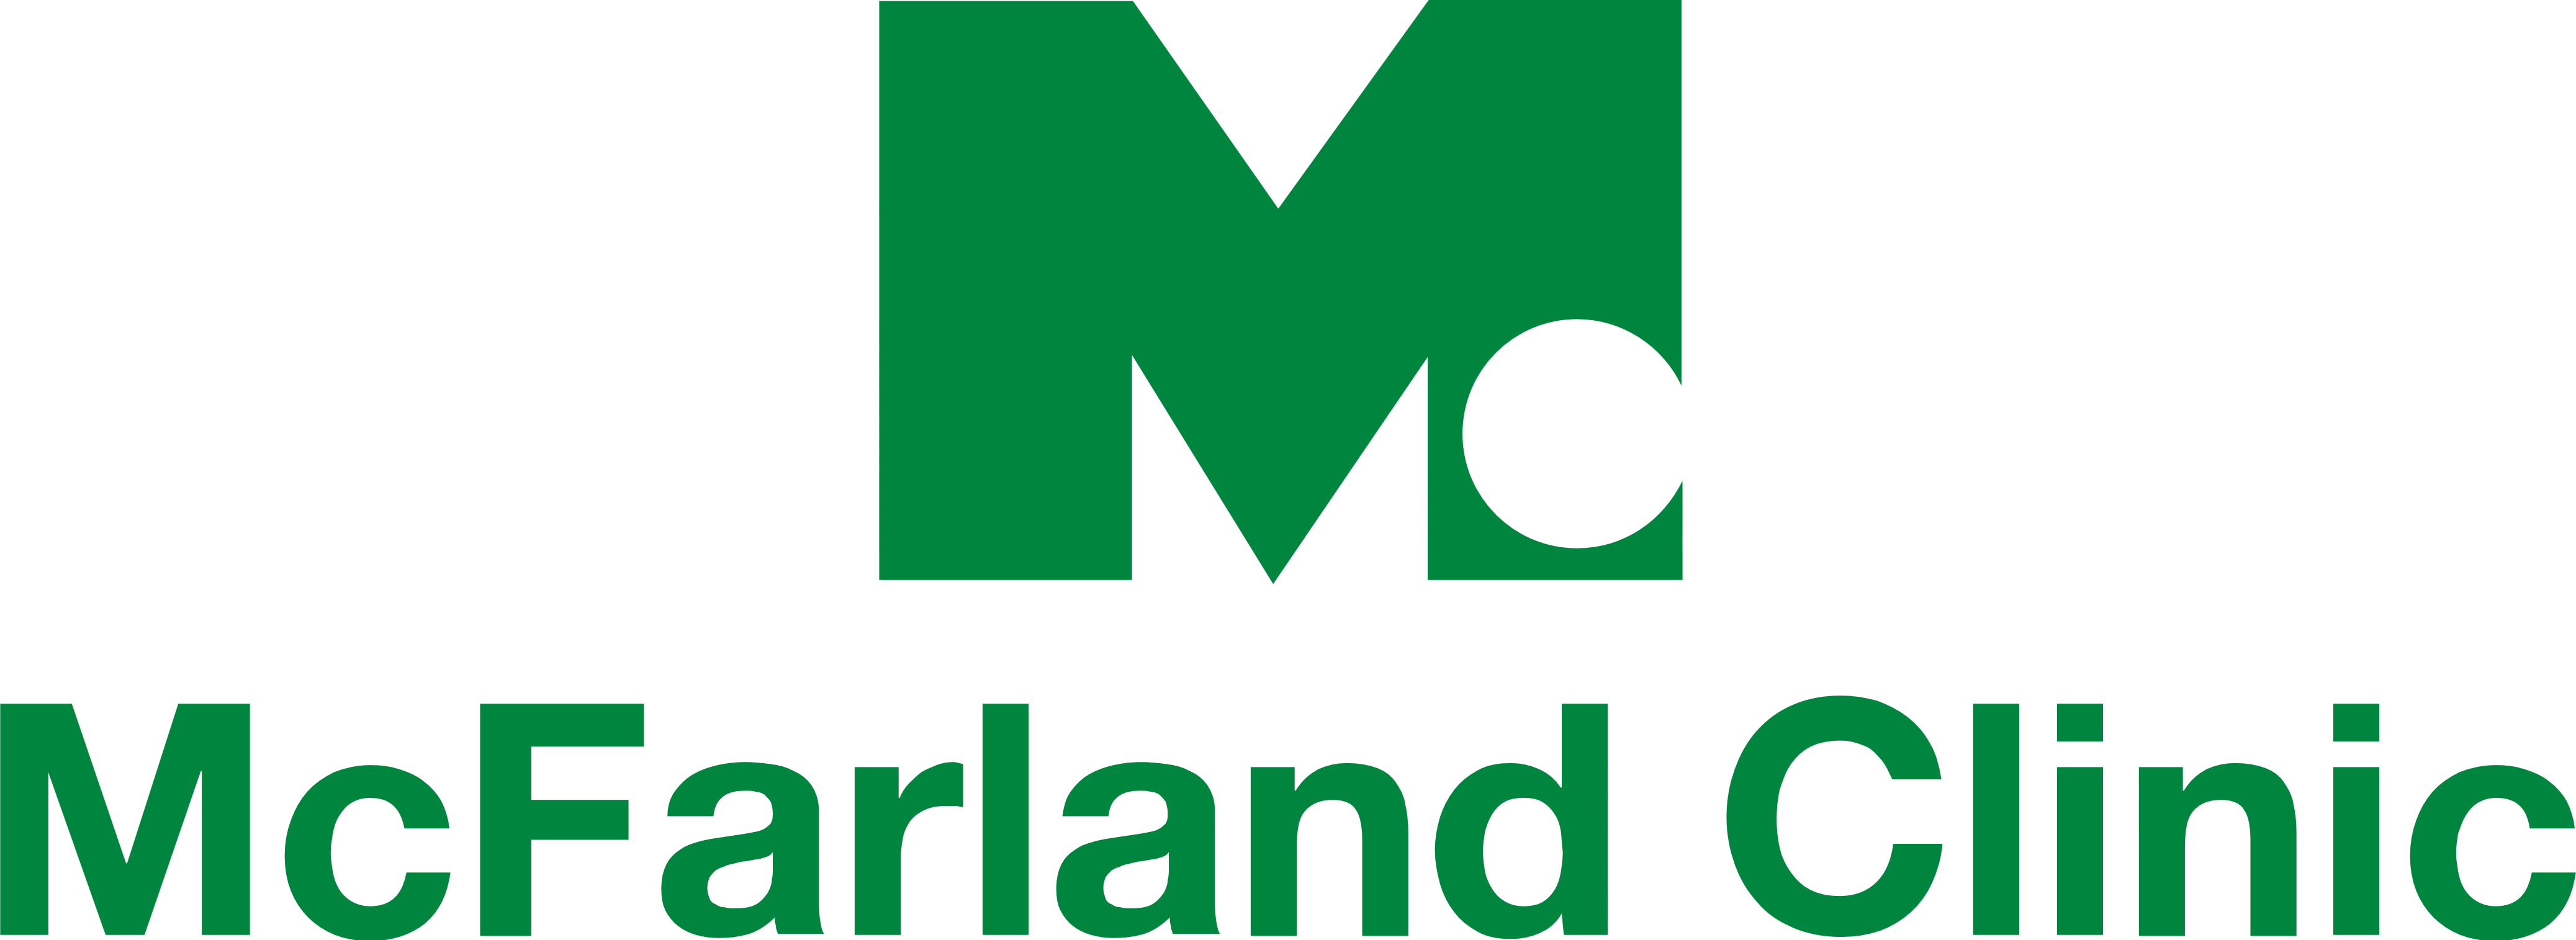 McFarland Clinic – Logos Download